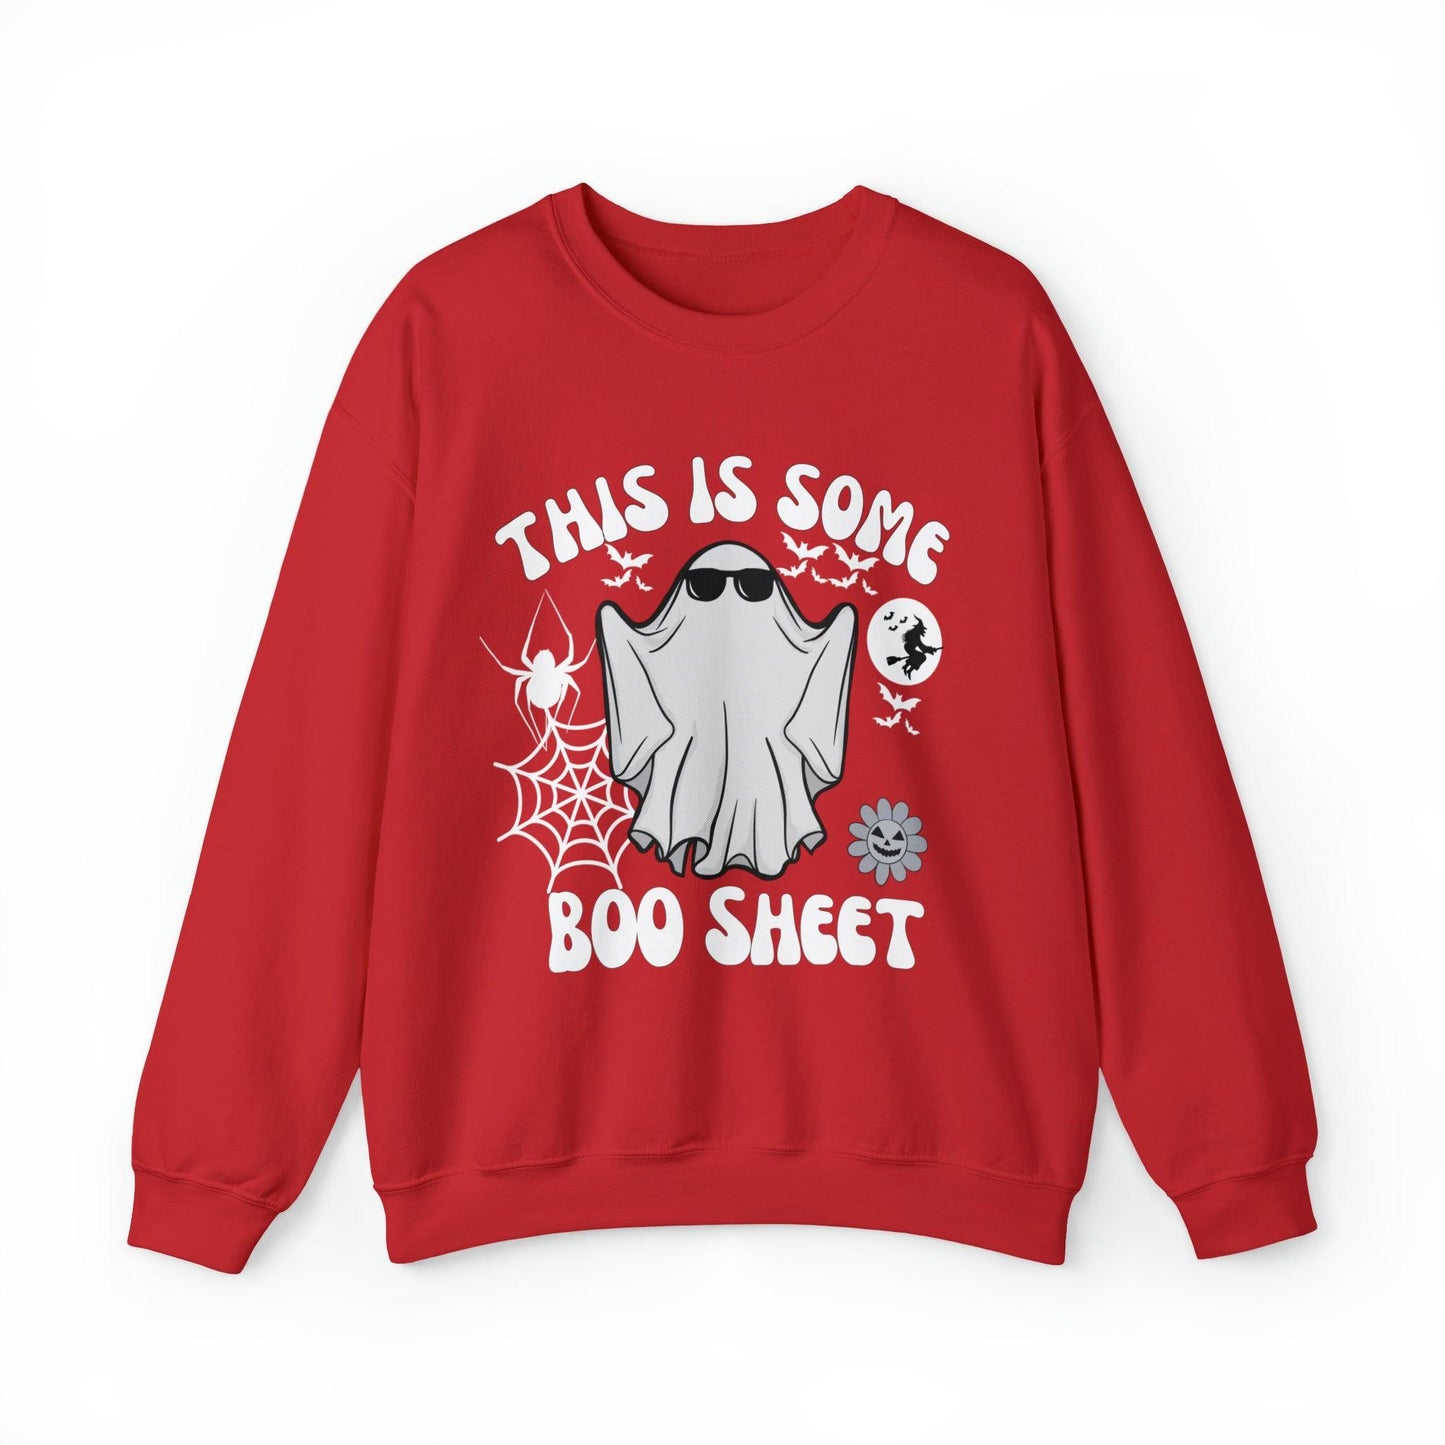 This Is Some Boo Sheet Ghost Sweatshirt Cute Ghost Sweatshirt Boo Ghost Sweatshirt Gift Shirt Funny Halloween Shirt Spooky Season Shirt